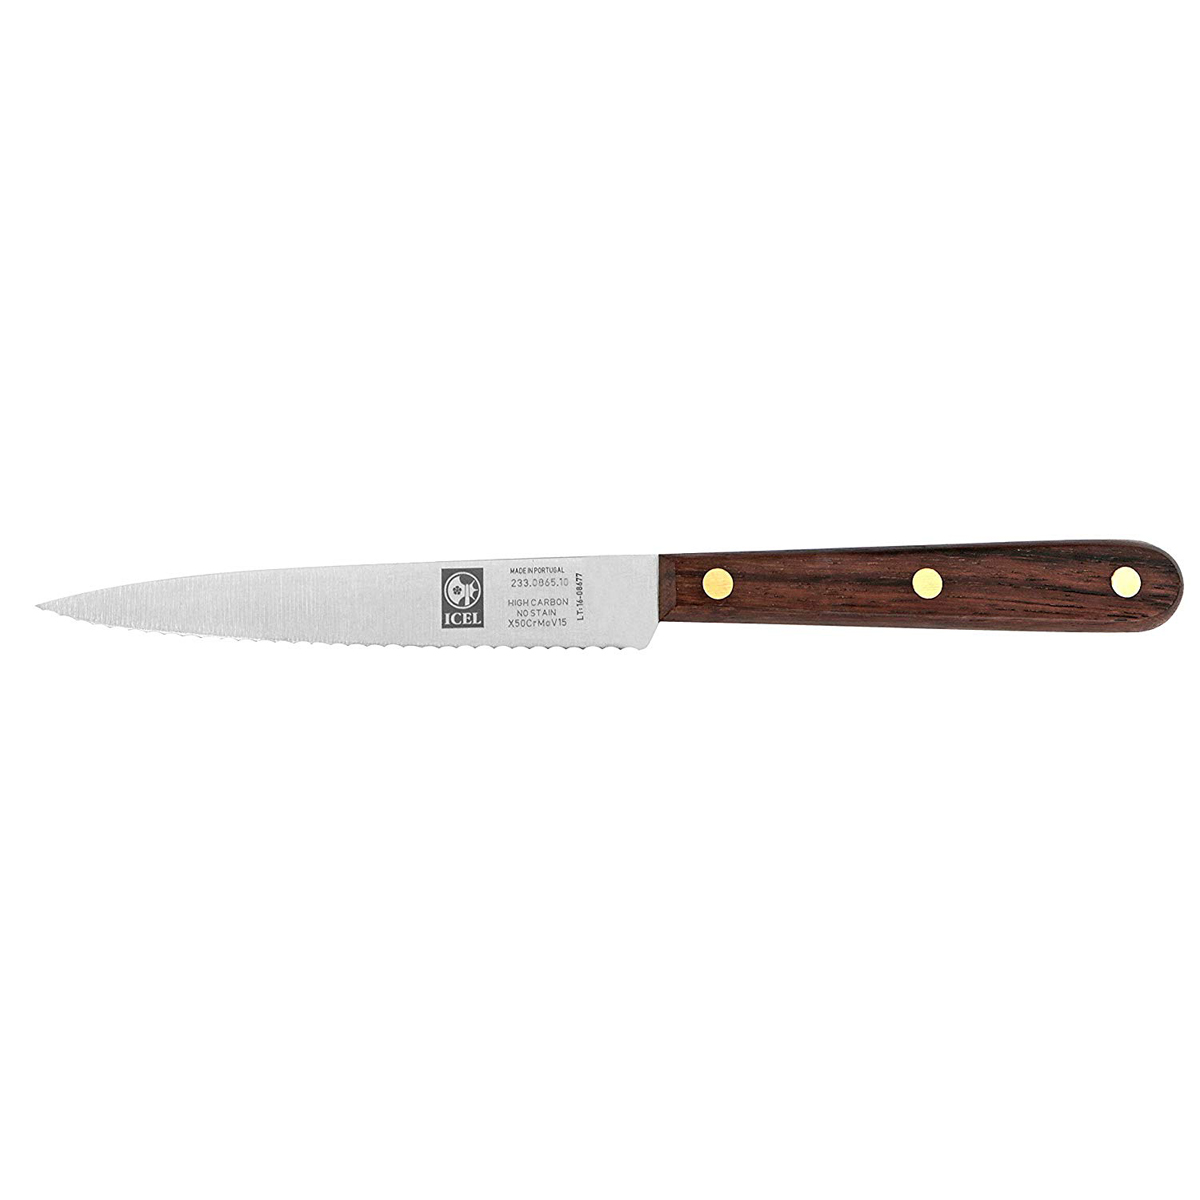 Icel 233865010 4" Serrated Paring Knife, Brown Rosewood Handle, Full Tang Blade image 1